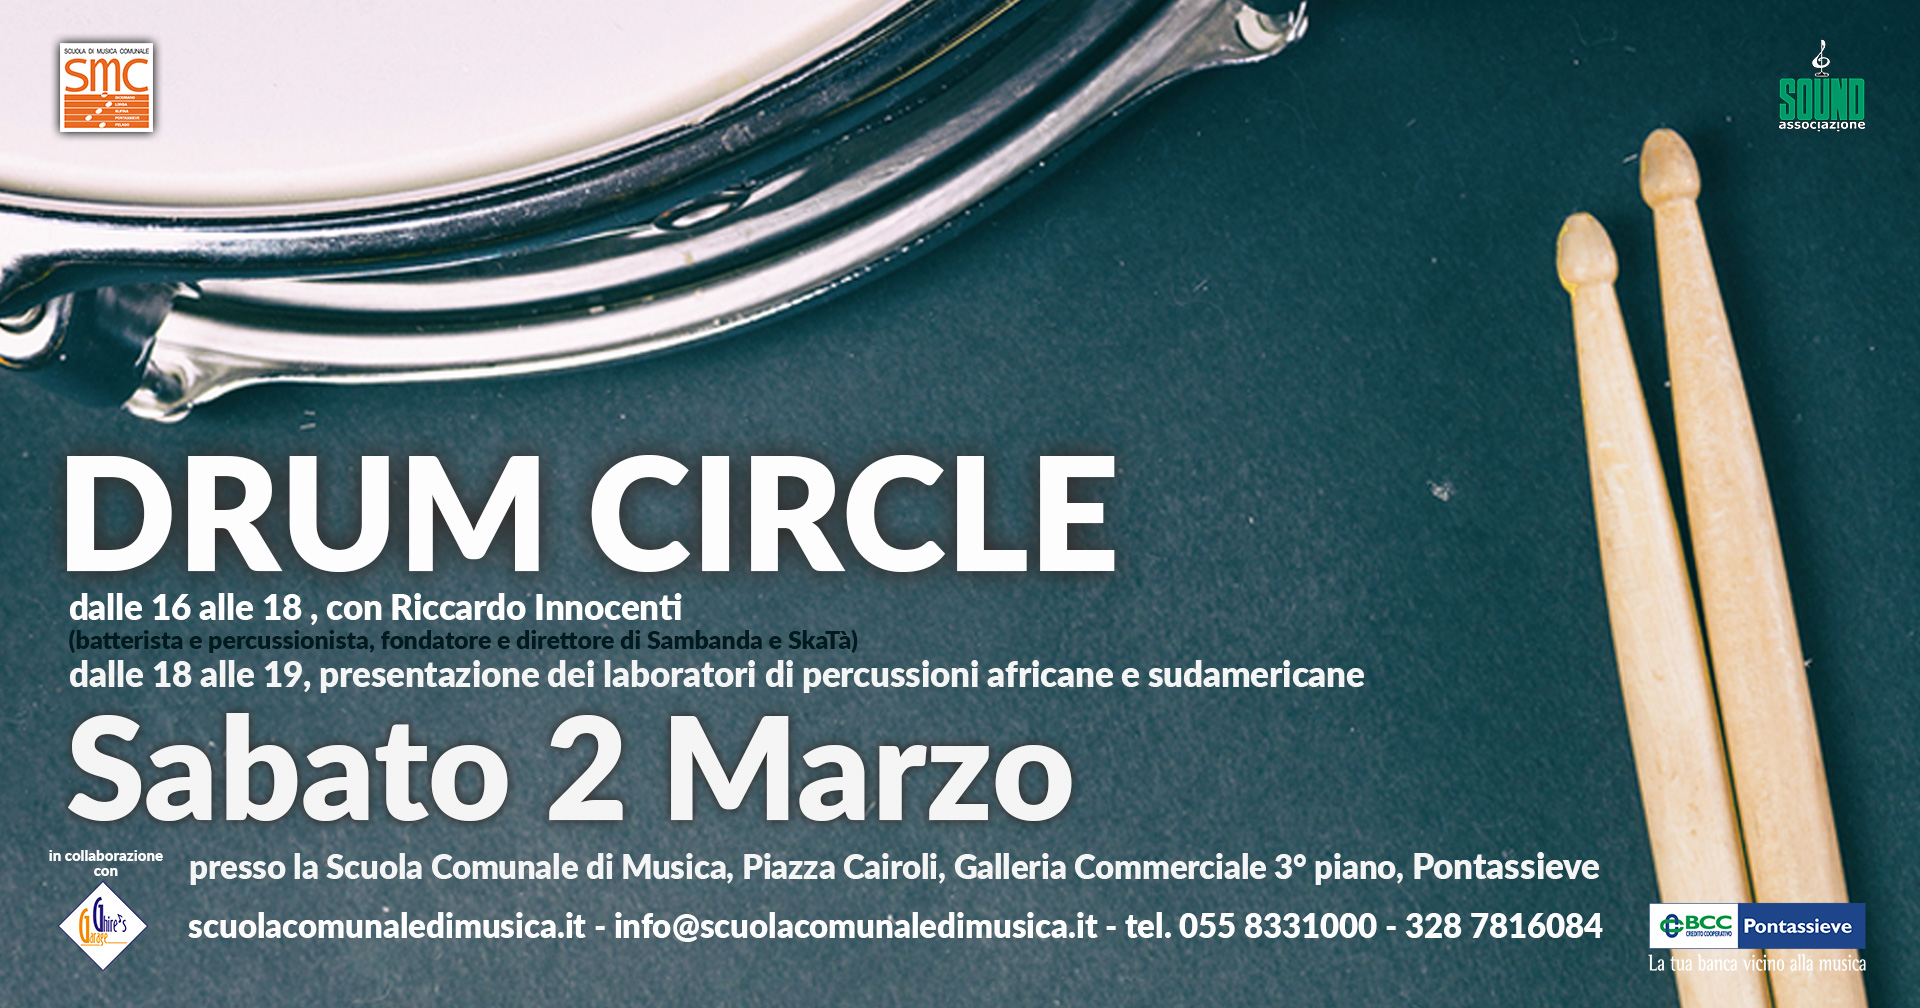 Drum Circle Sabato 2 Marzo 2019